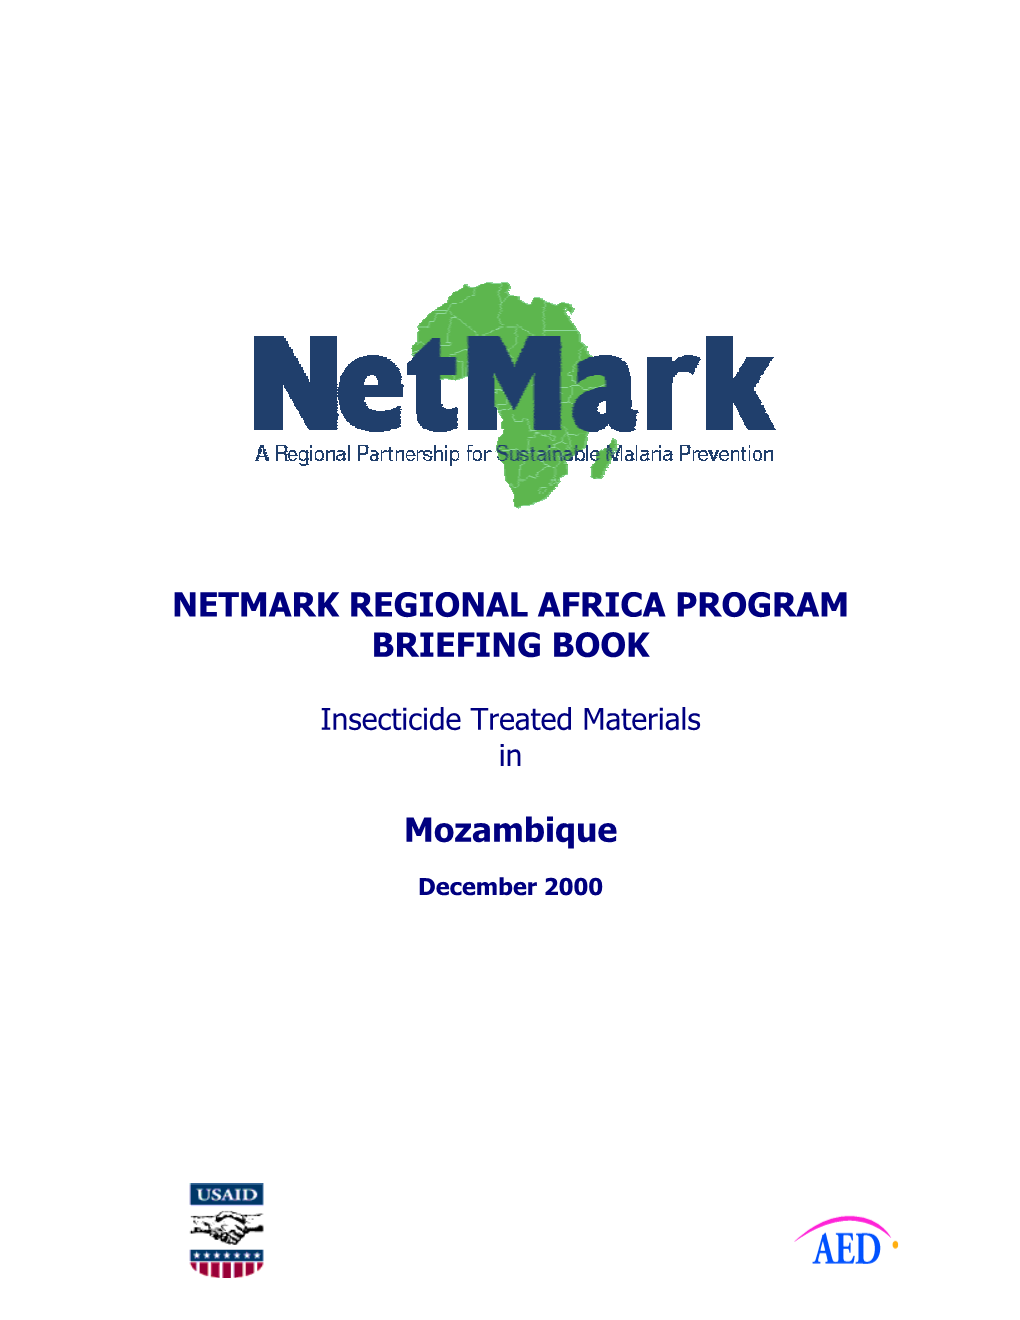 Netmark Regional Africa Program Briefing Book